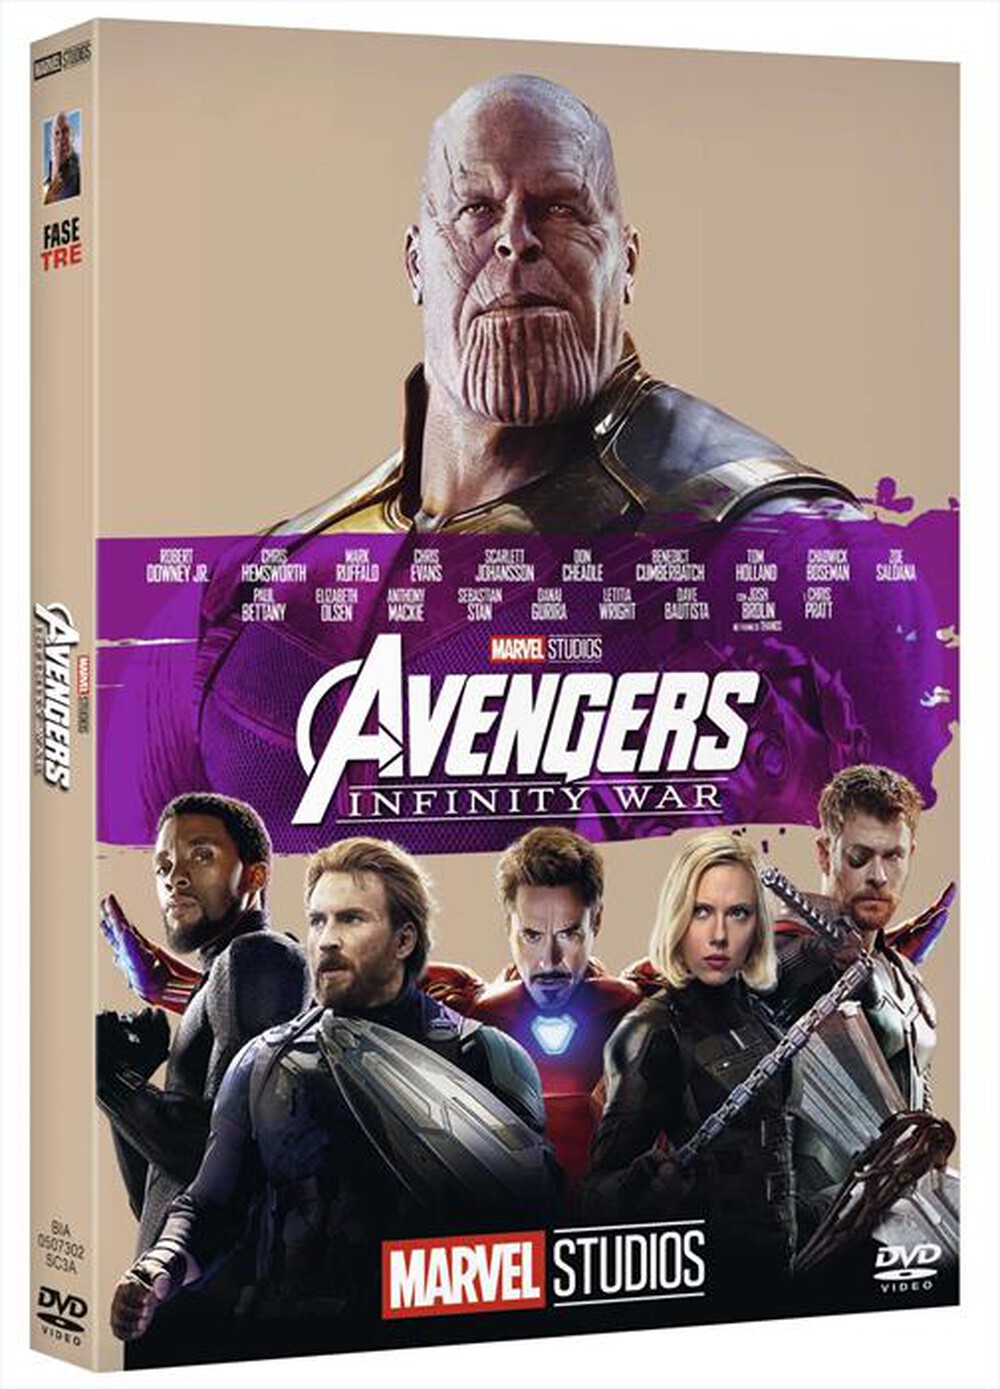 "EAGLE PICTURES - Avengers: Infinity War (10 Anniversario)"